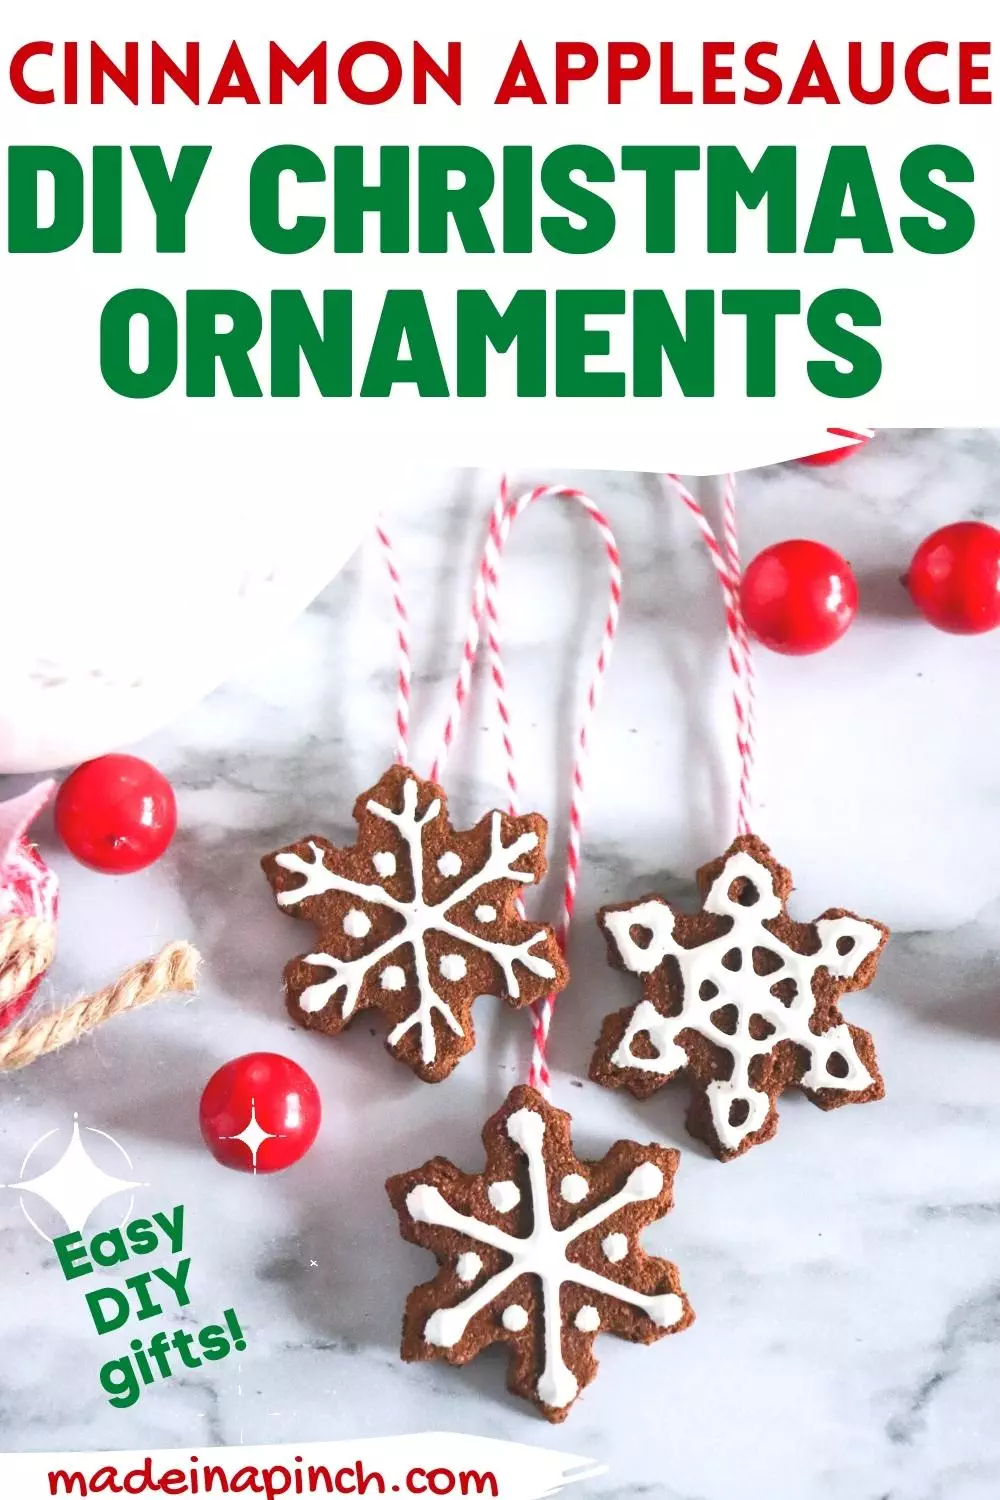 apple cinnamon dough ornaments pin